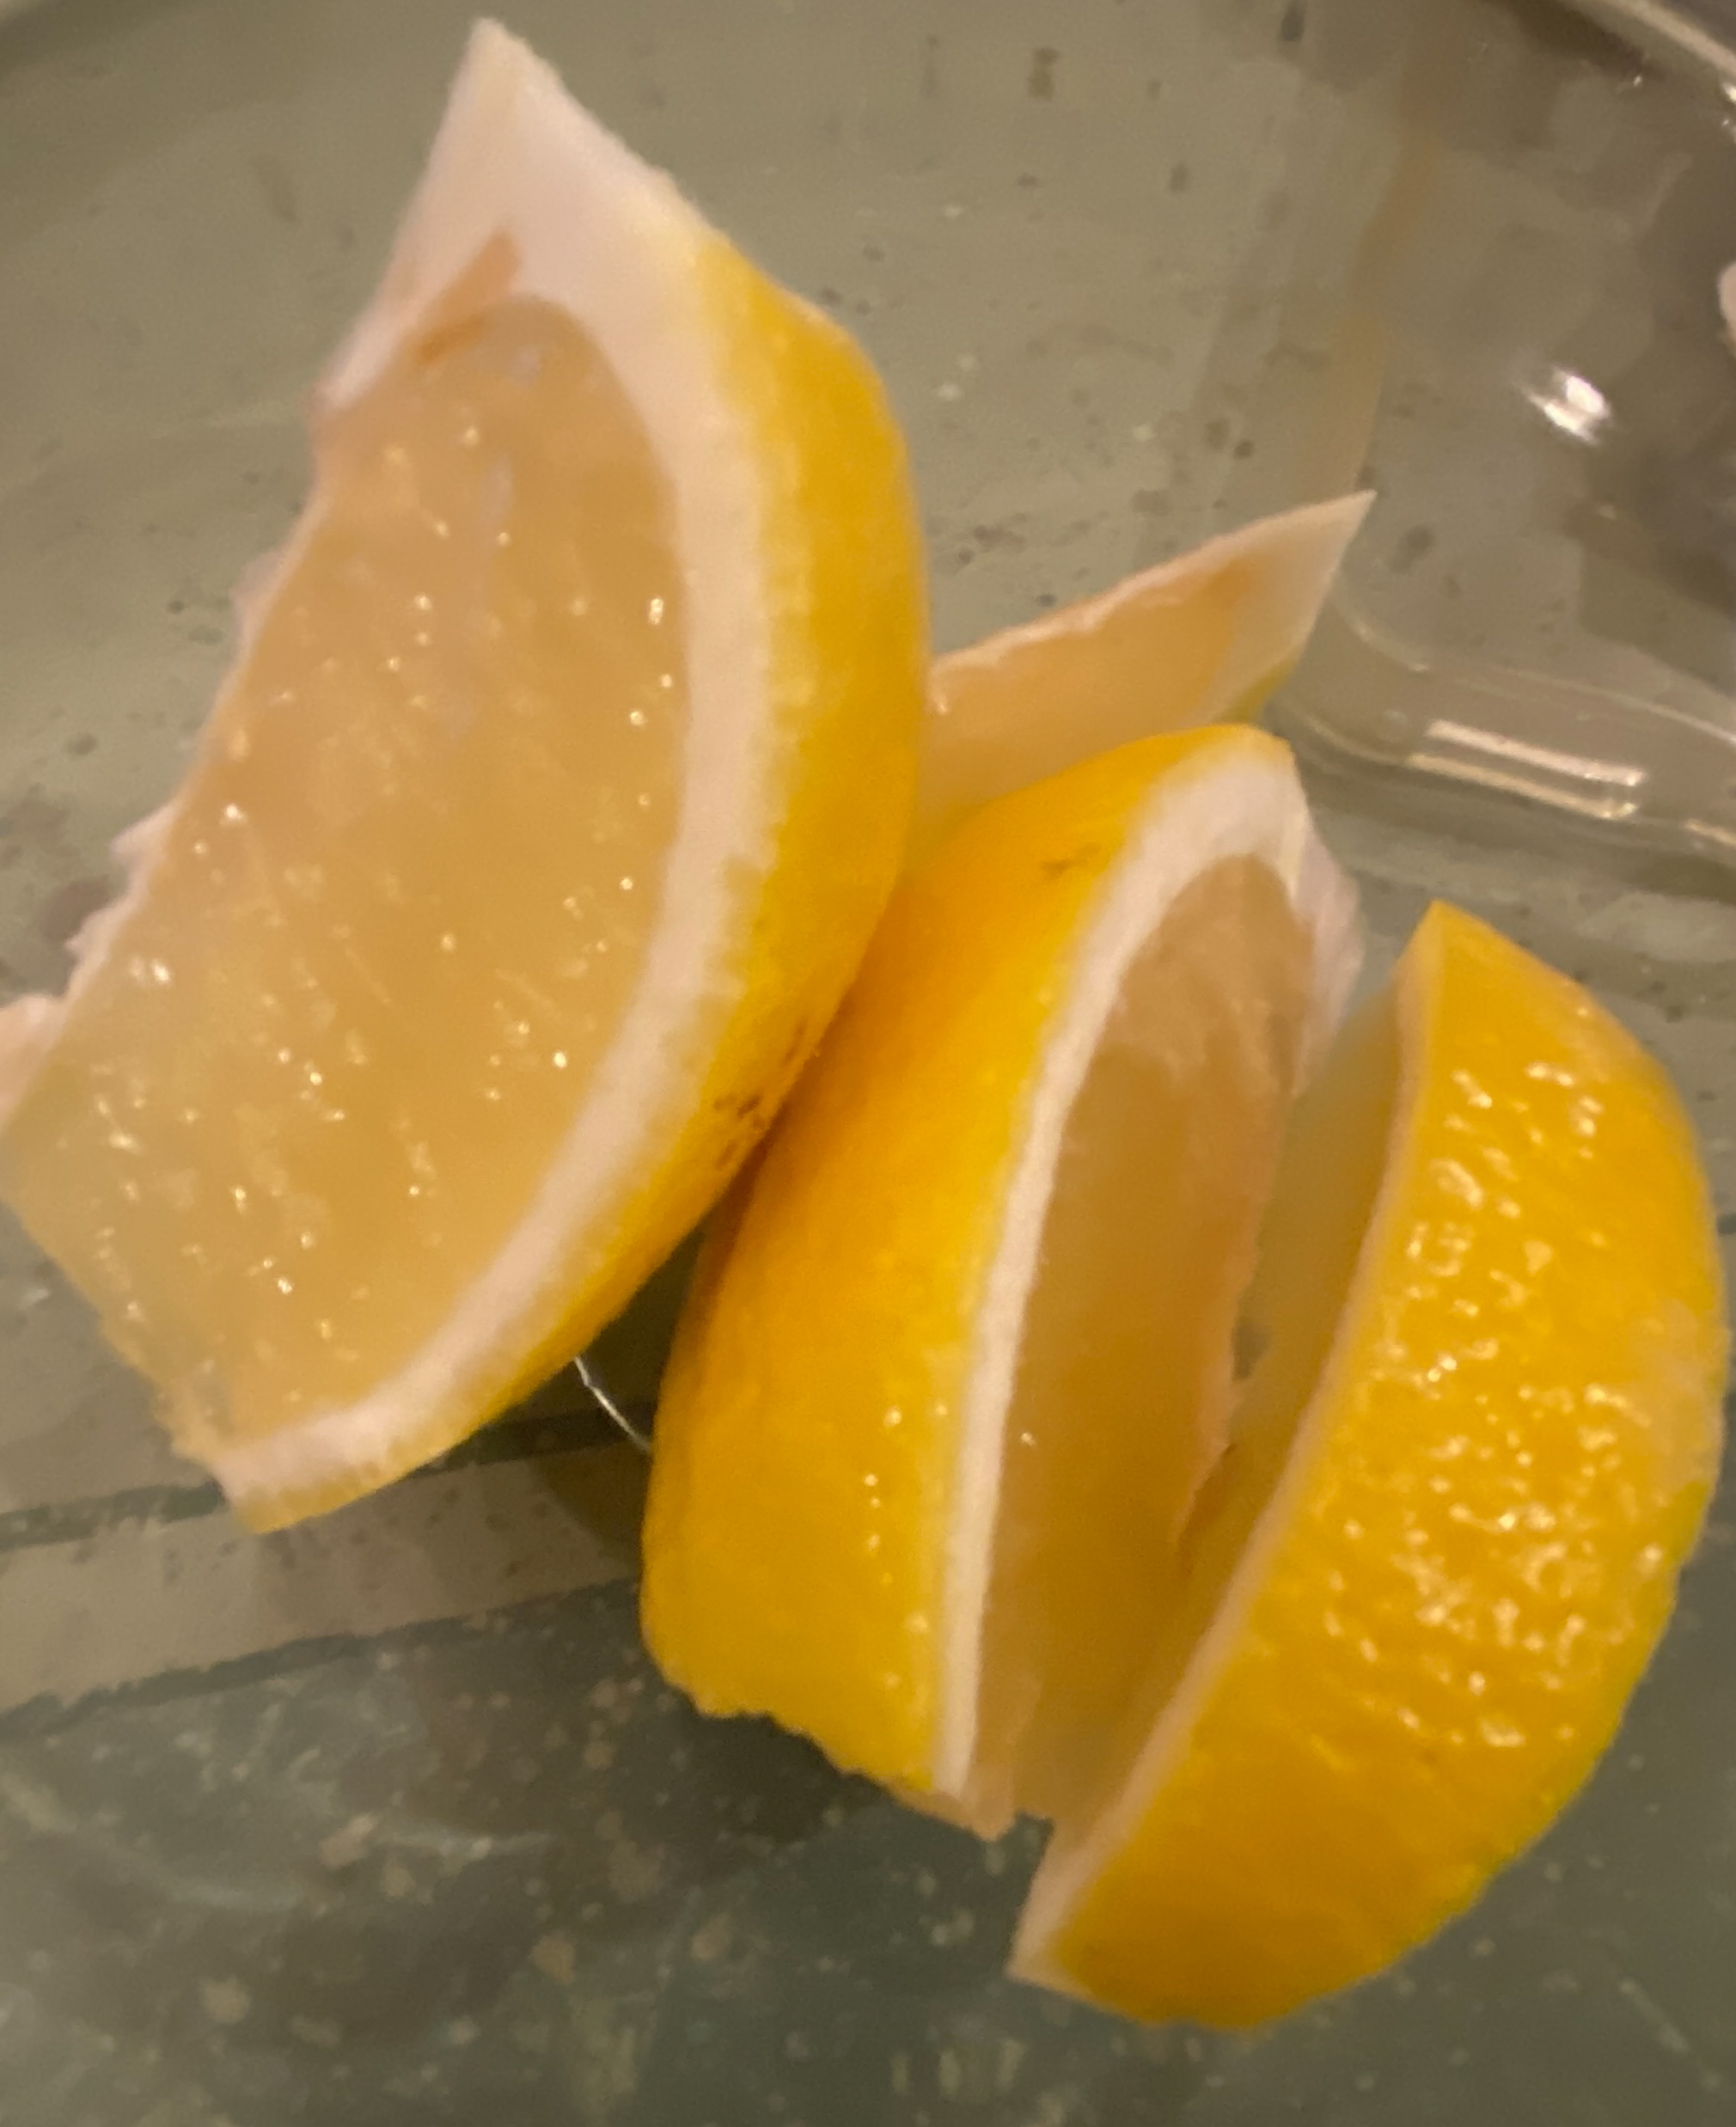 Closer view of lemons